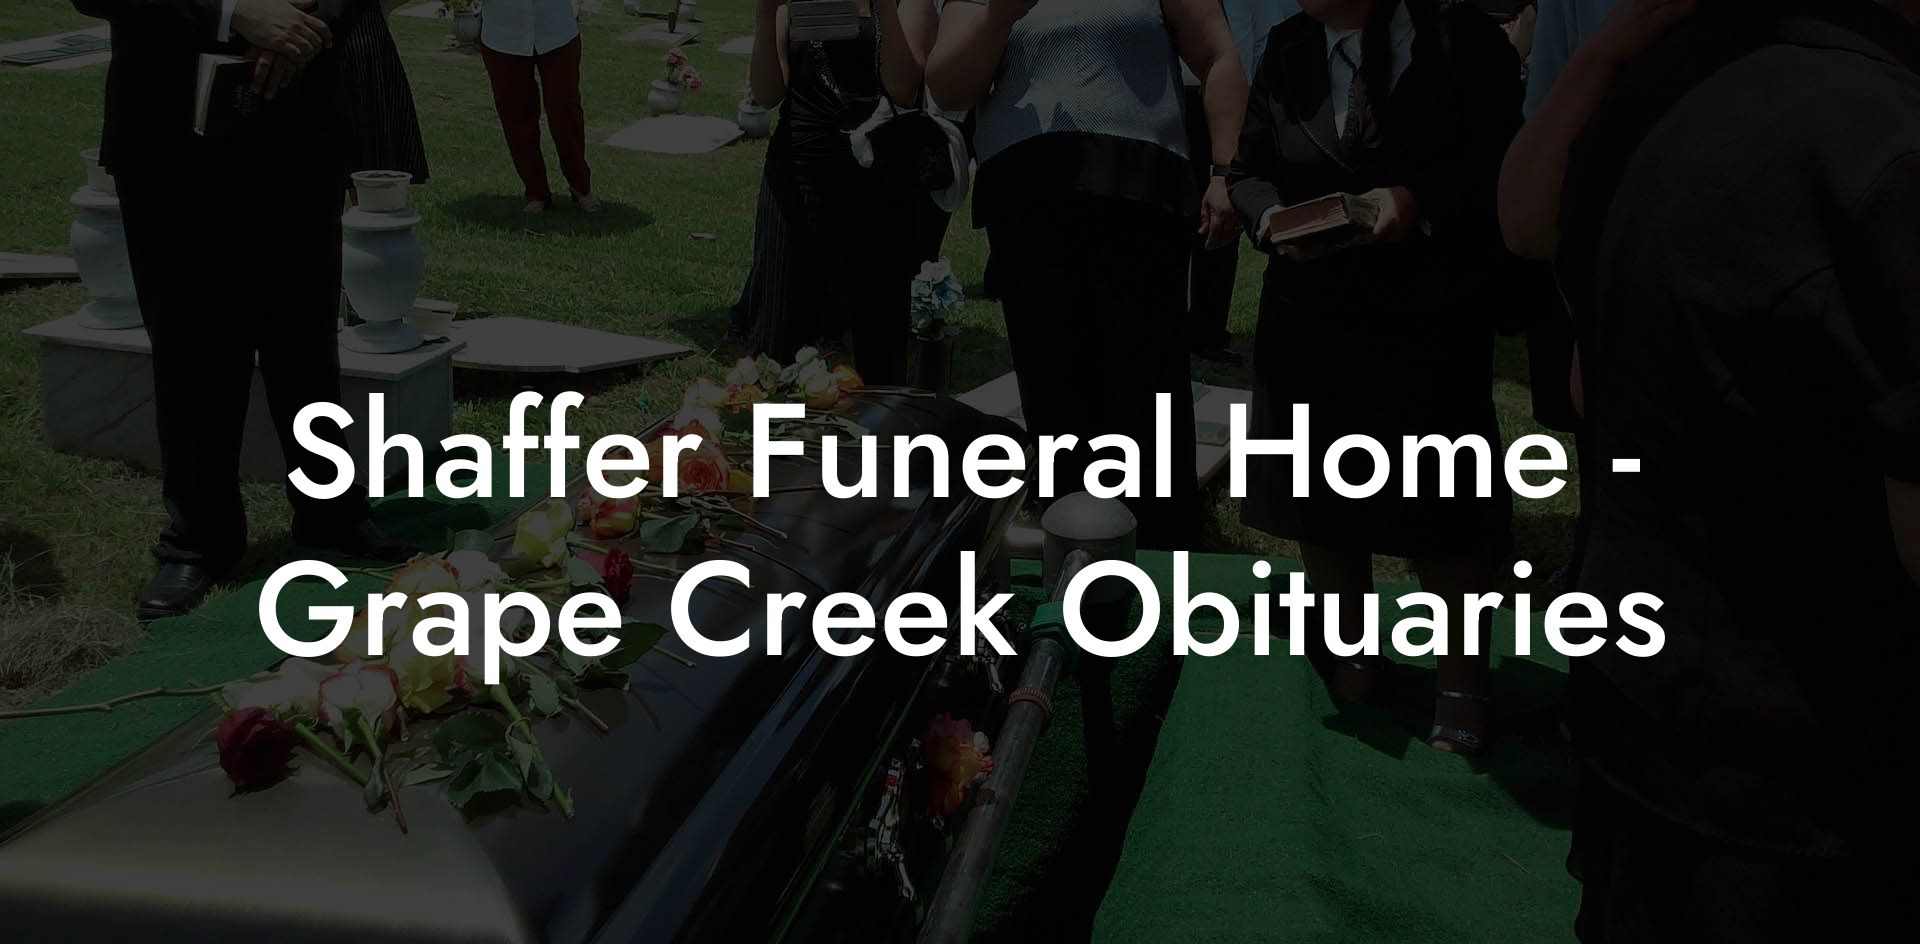 Shaffer Funeral Home - Grape Creek Obituaries